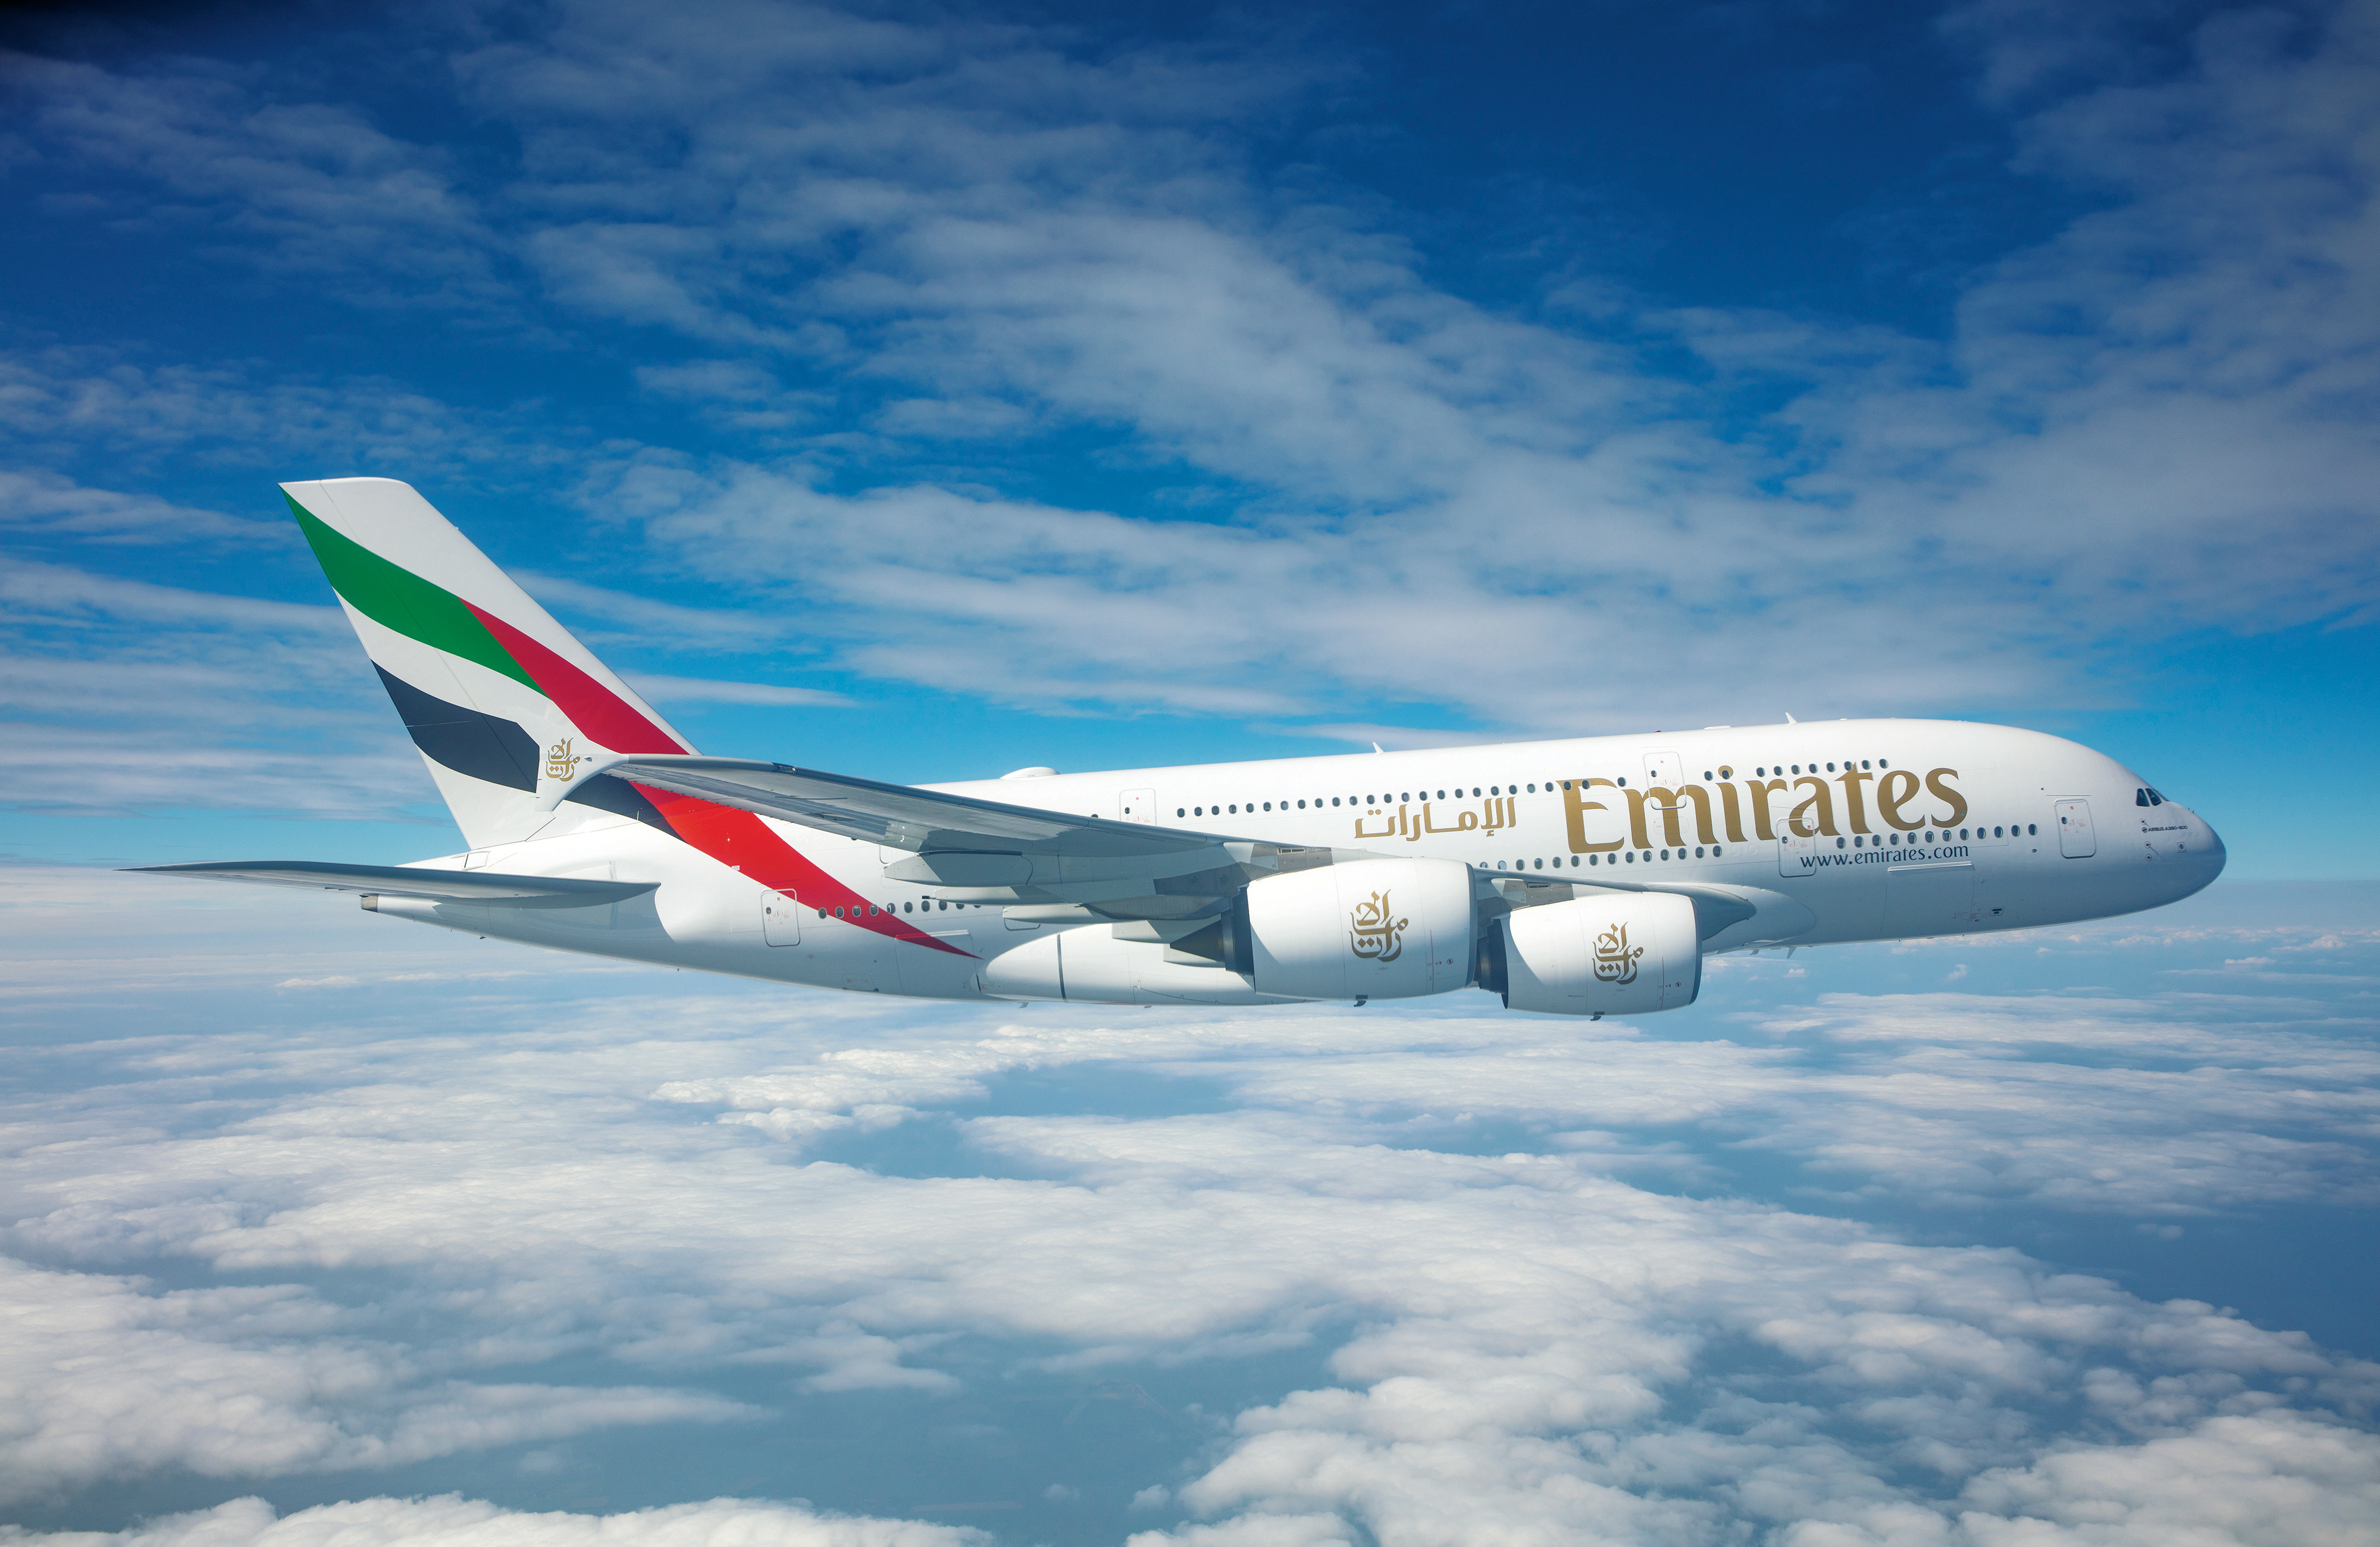 Сайт эмирейтс. Авиакомпания Дубай Эмирейтс. A350 Emirates. Дубайская авиакомпания Emirates. Airbus a350 Emirates.